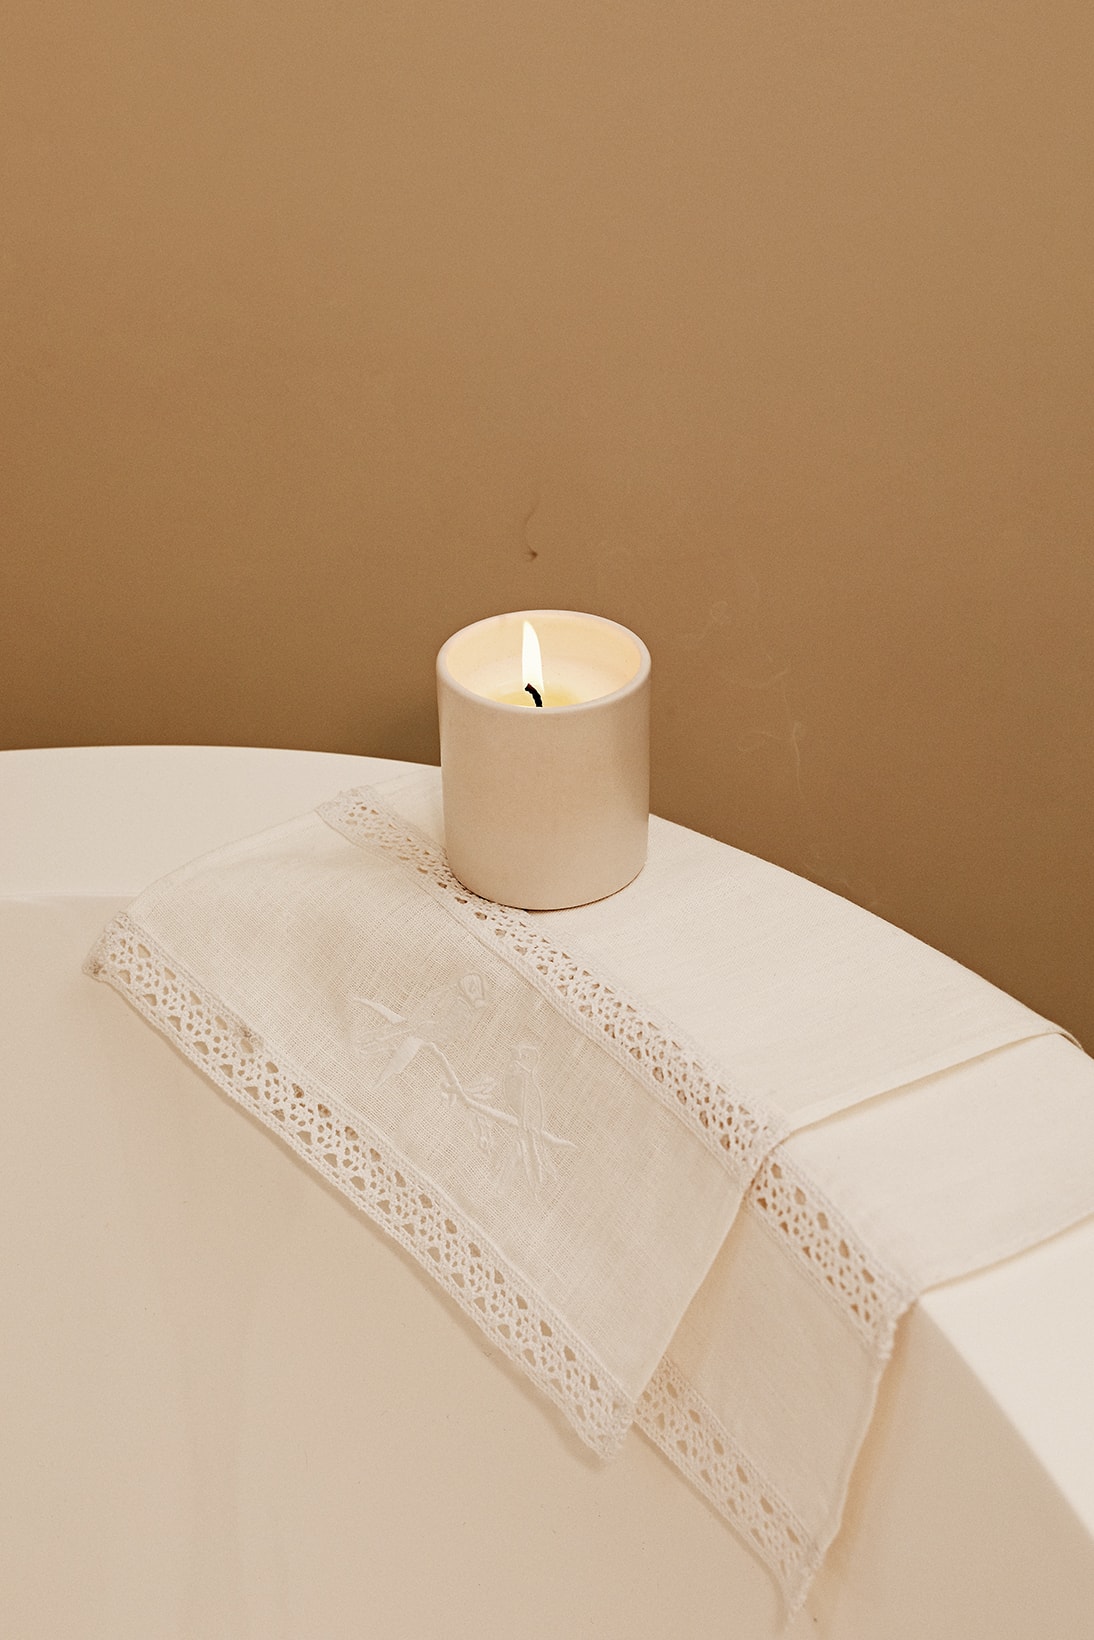 sleeper home homeware decor collection cloth towel white candle bath tub toilet